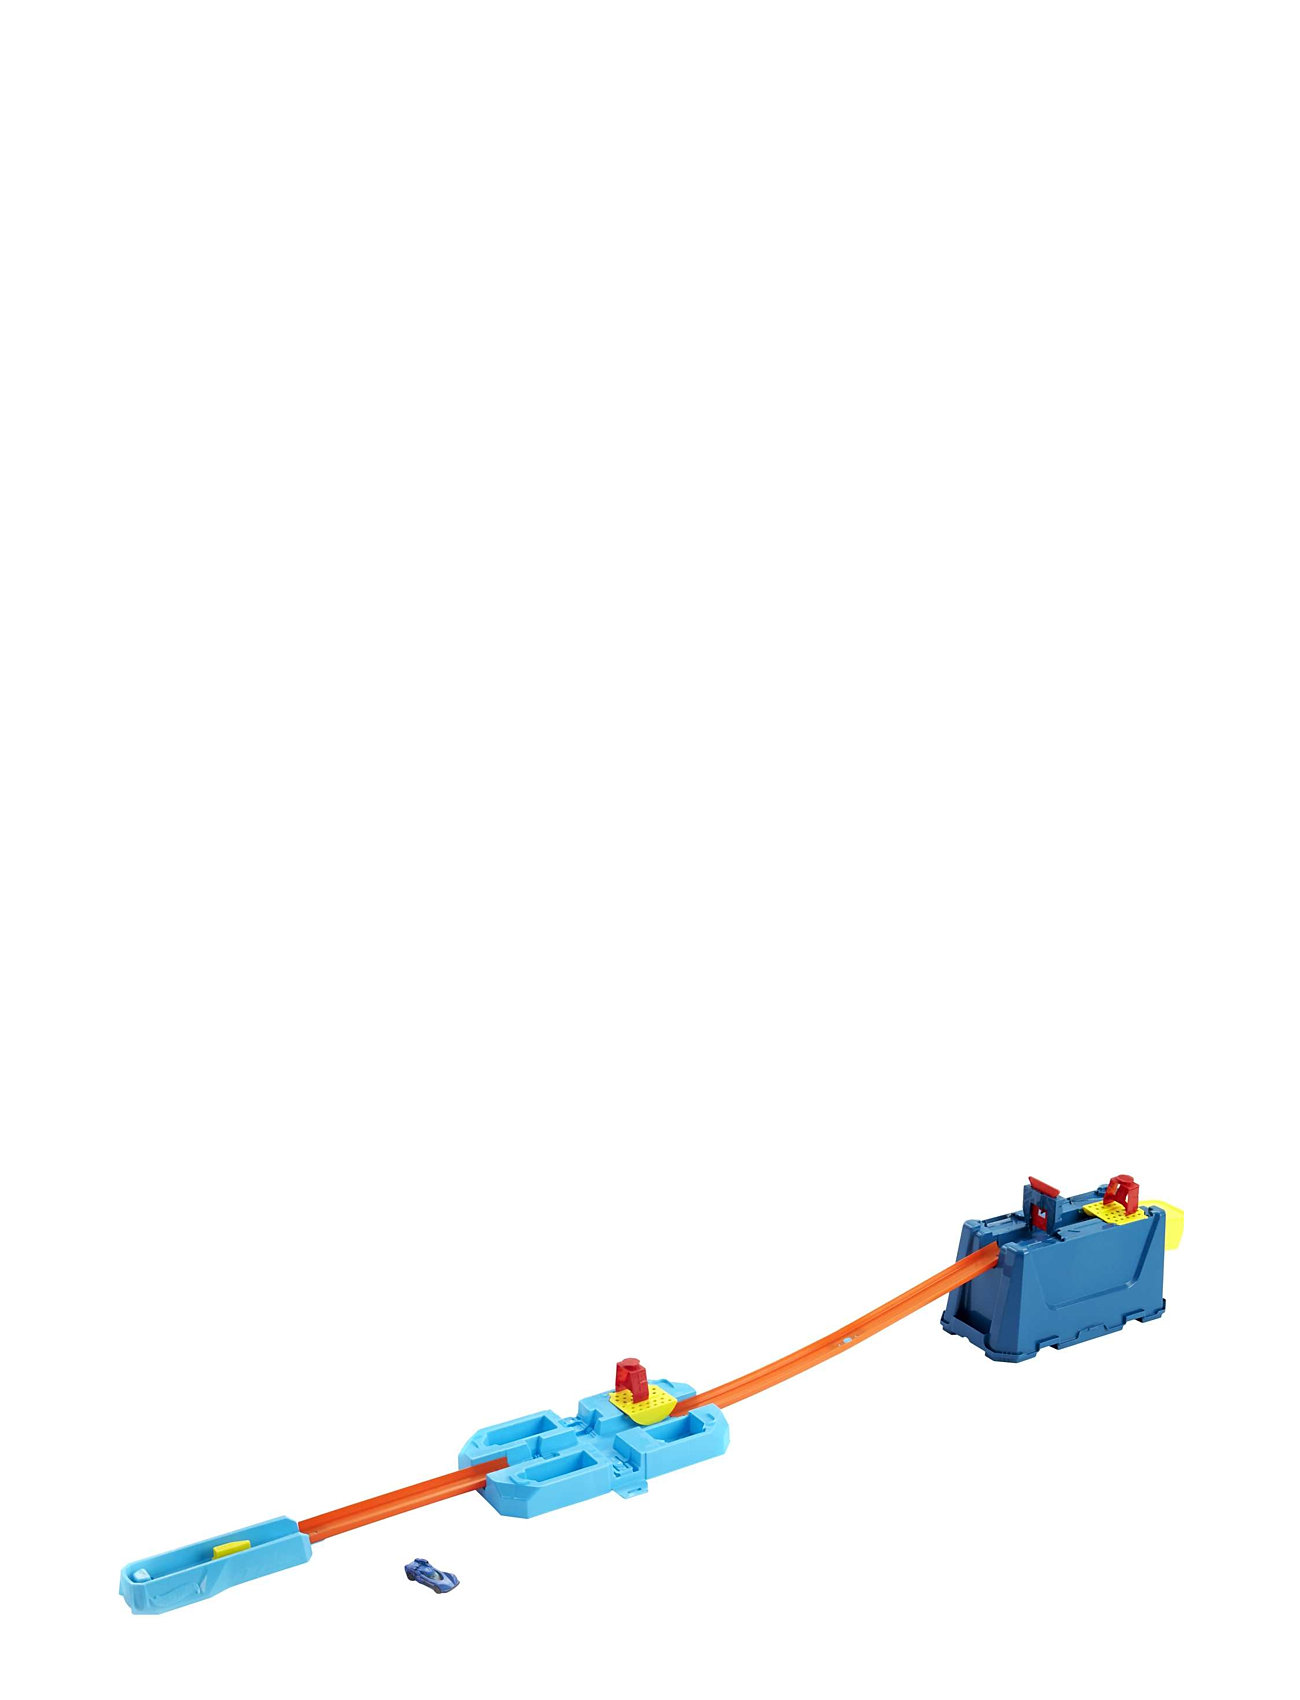 Hw Track Builder Crash Box Toys Toy Cars & Vehicles Race Tracks Blå Hot Wheels